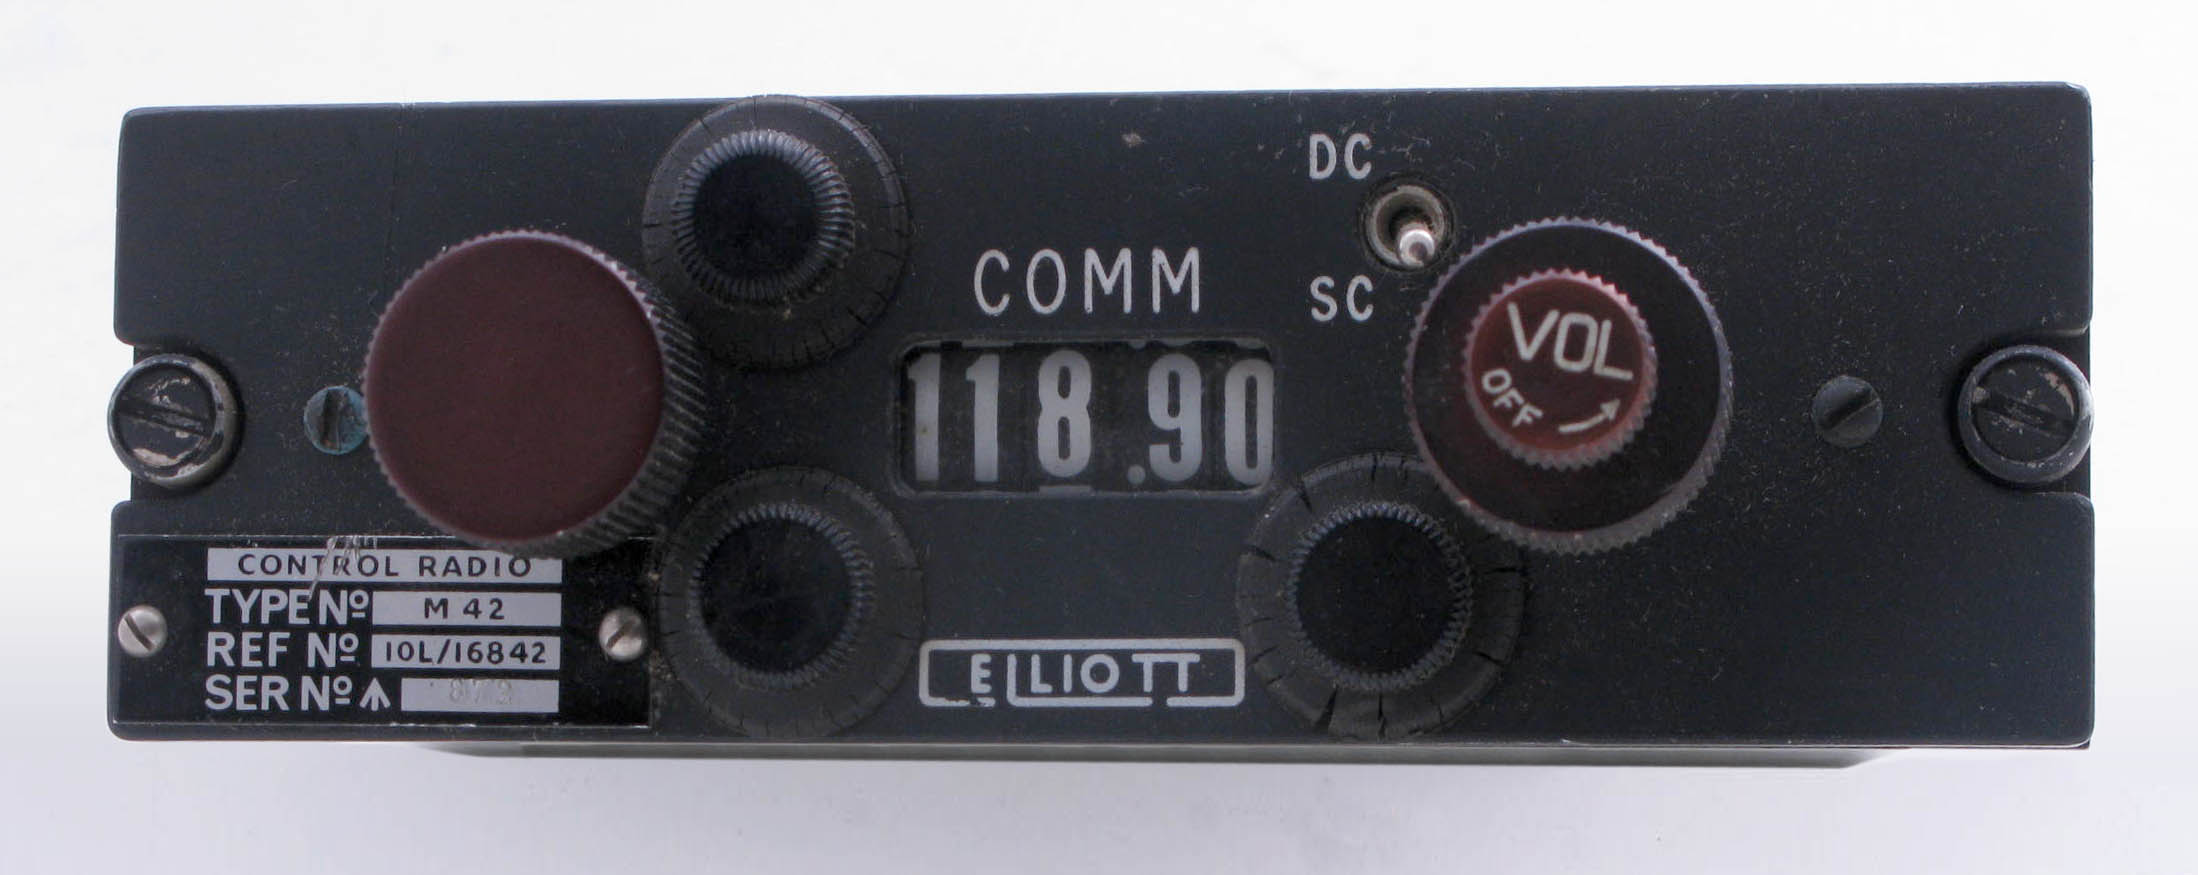 Control Radio